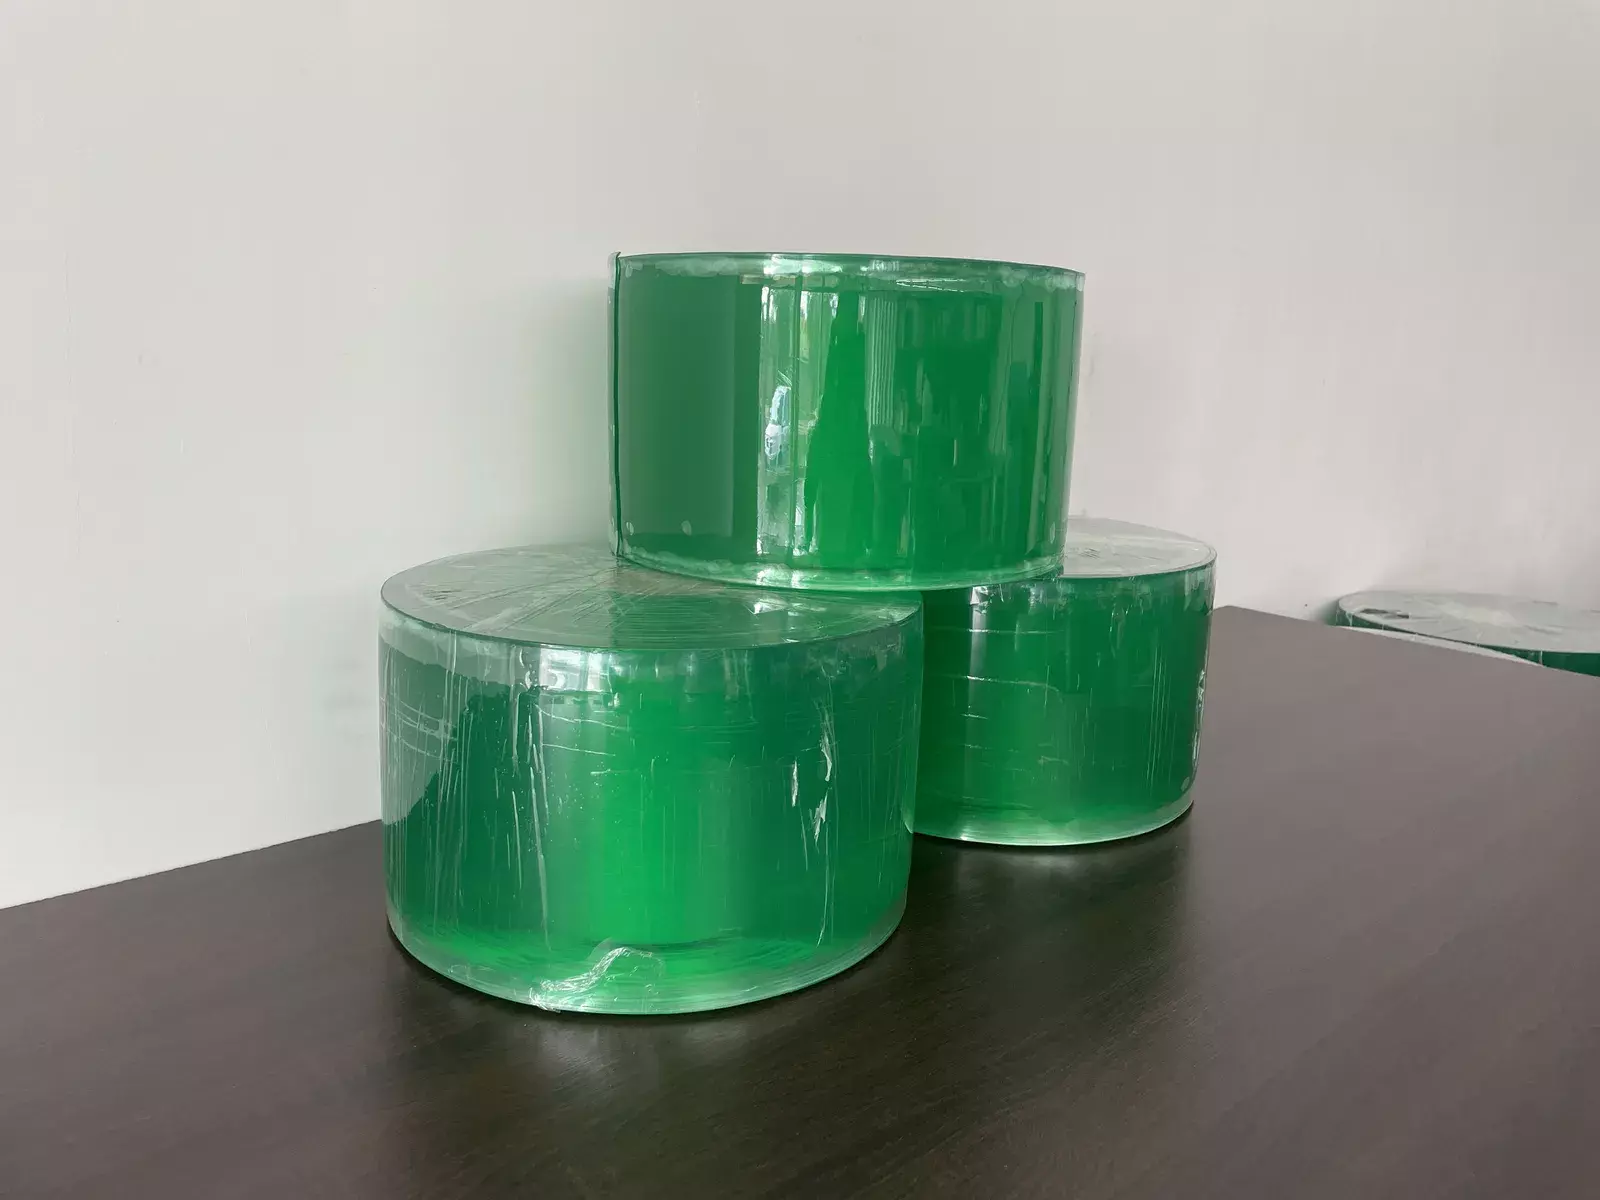 ПВХ завеса рулон прозрачная морозостойкая 2x200 (10м)